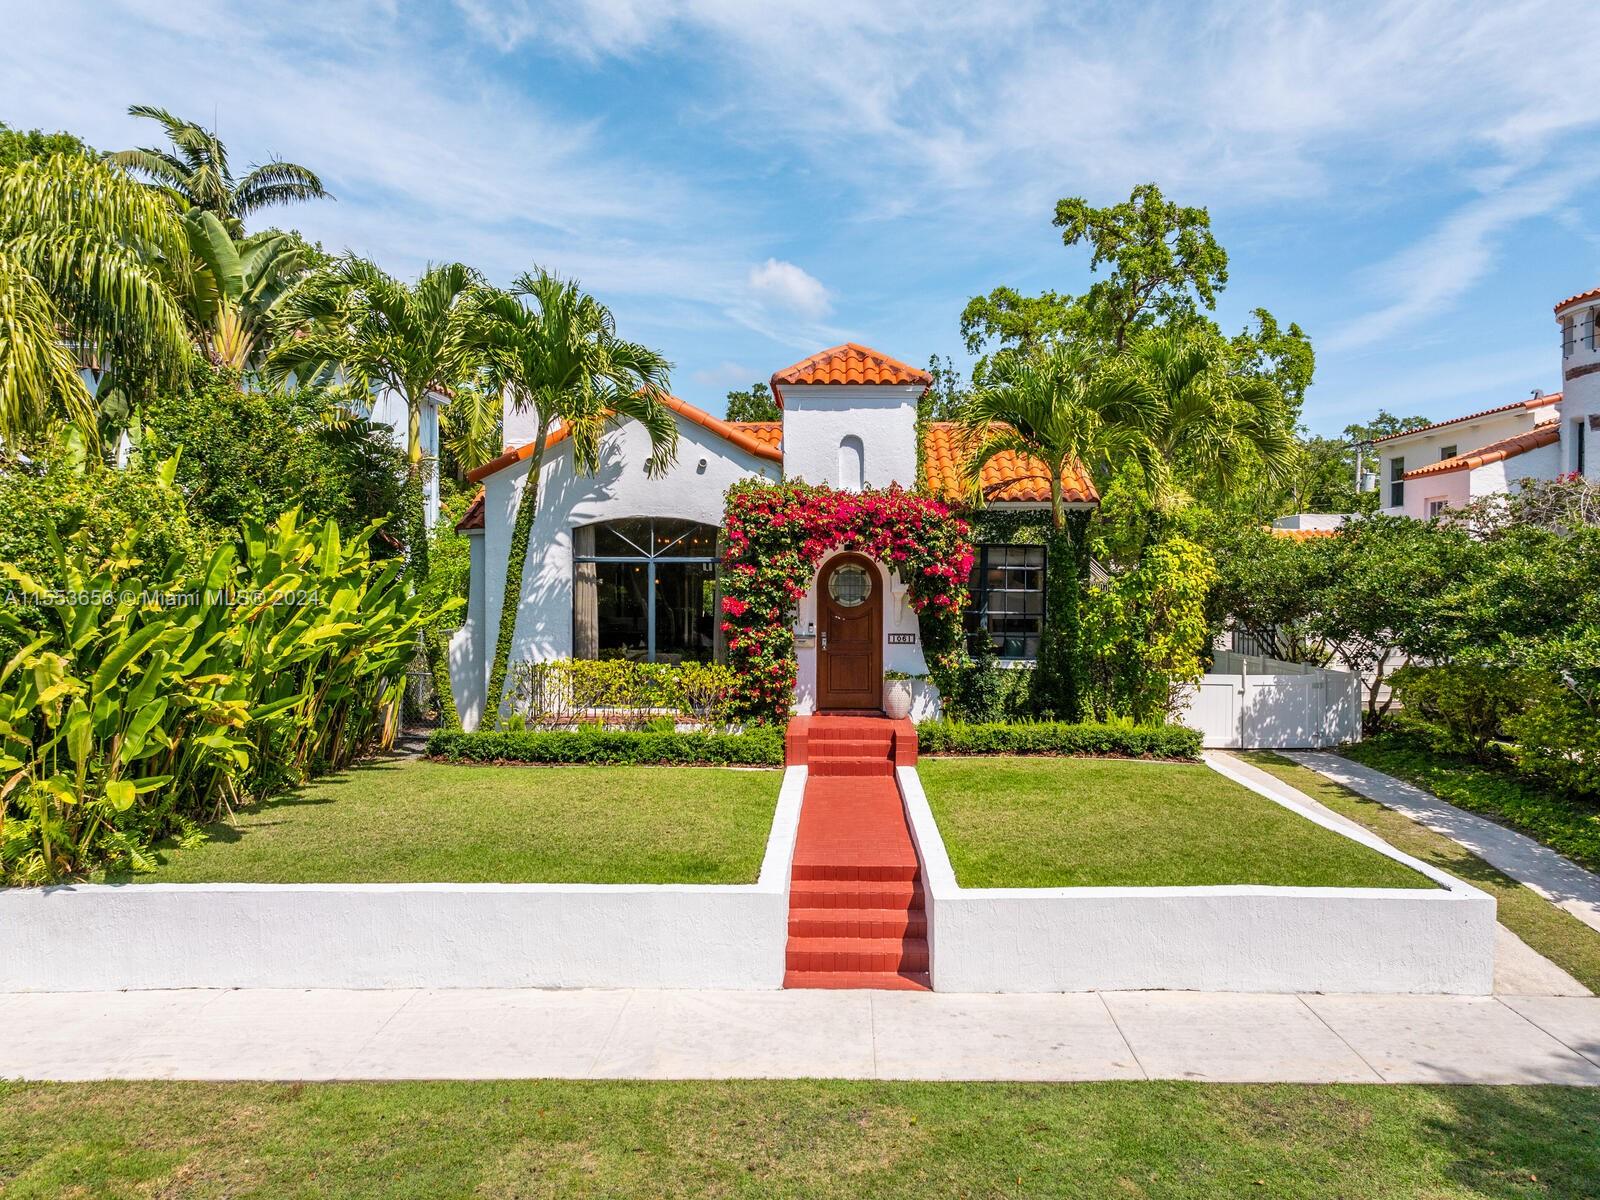 Property for Sale at 1061 Ne 91st Ter Ter, Miami Shores, Miami-Dade County, Florida - Bedrooms: 4 
Bathrooms: 3  - $1,850,000